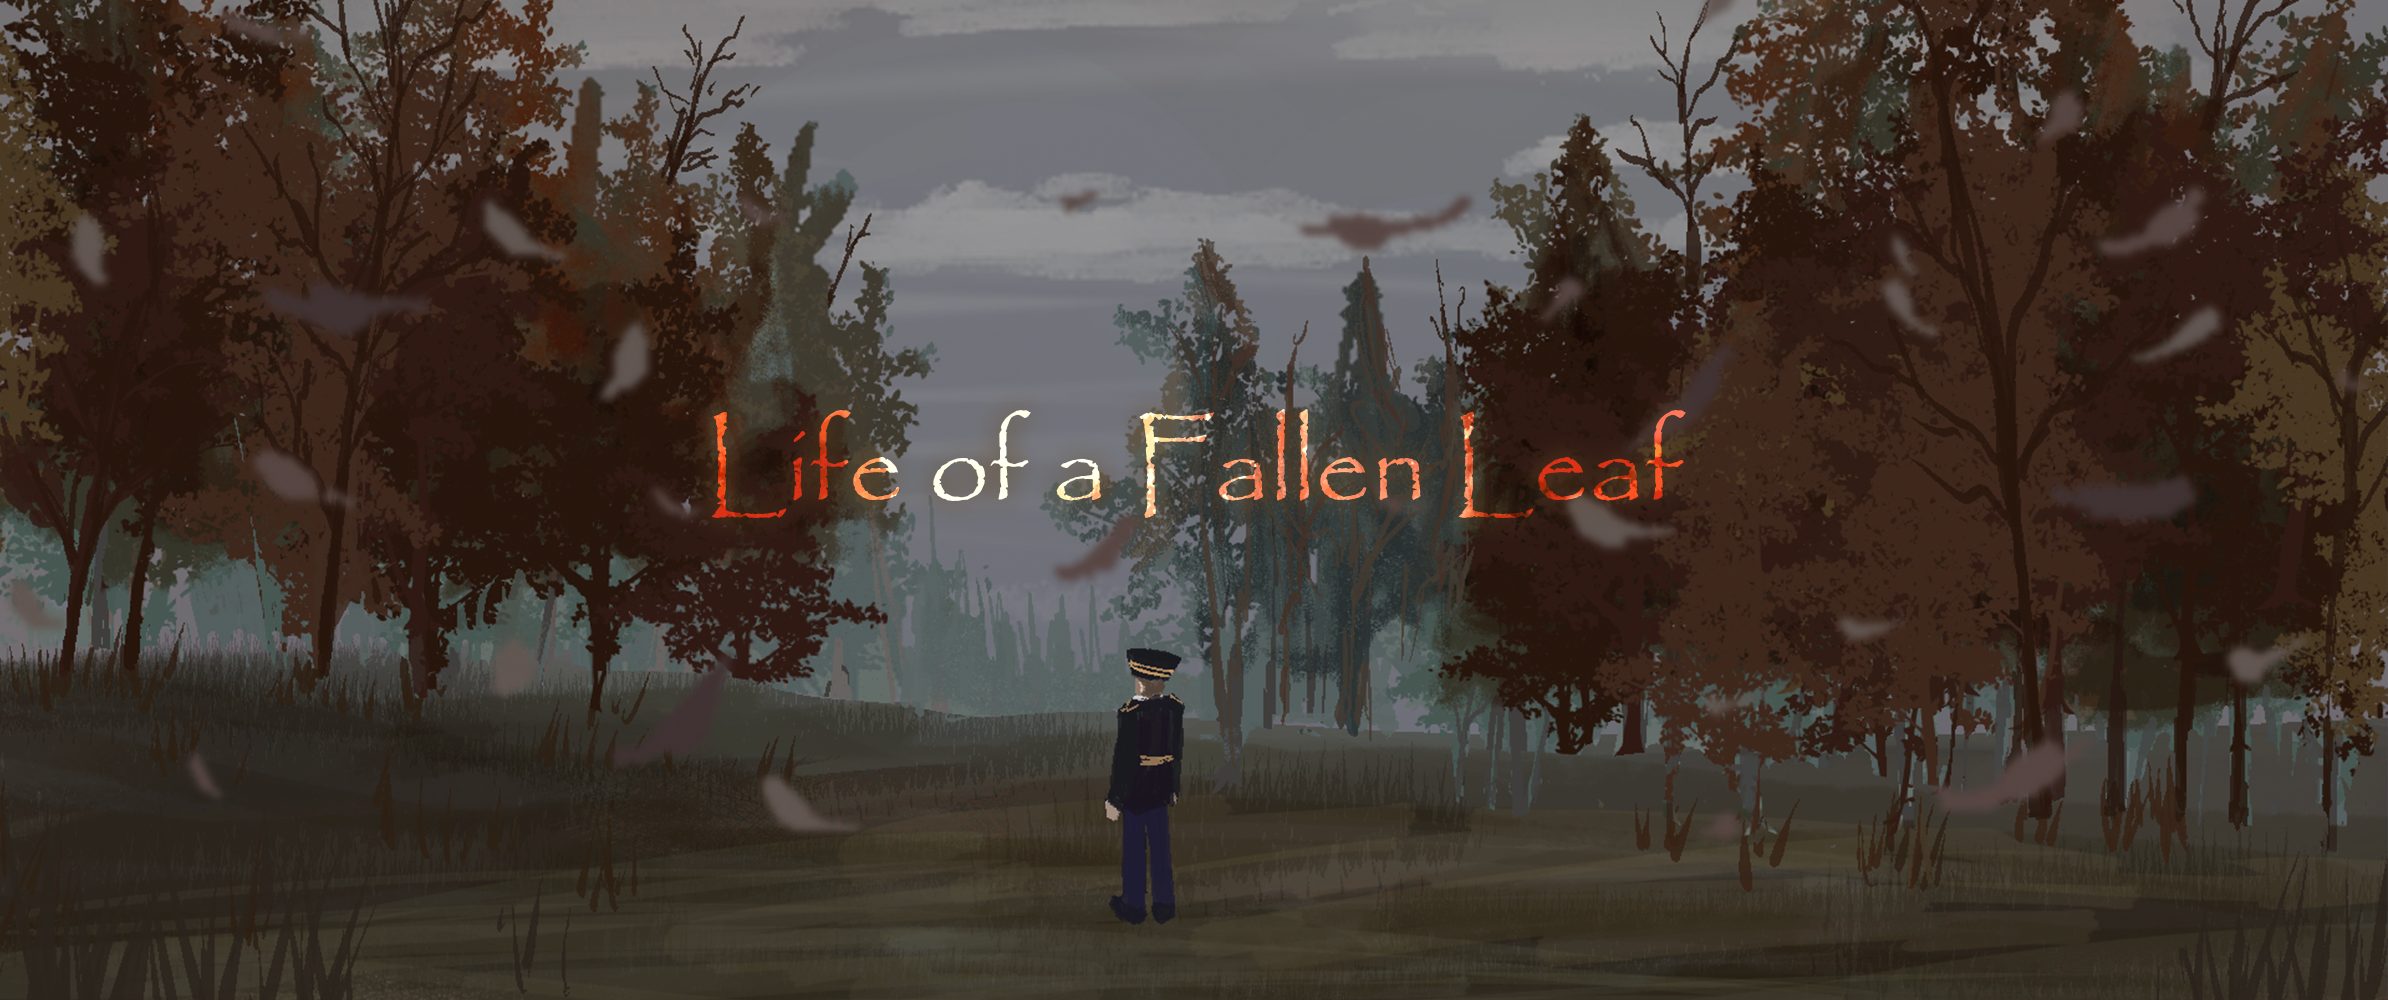 Life of a Fallen Leaf - Original Soundtrack